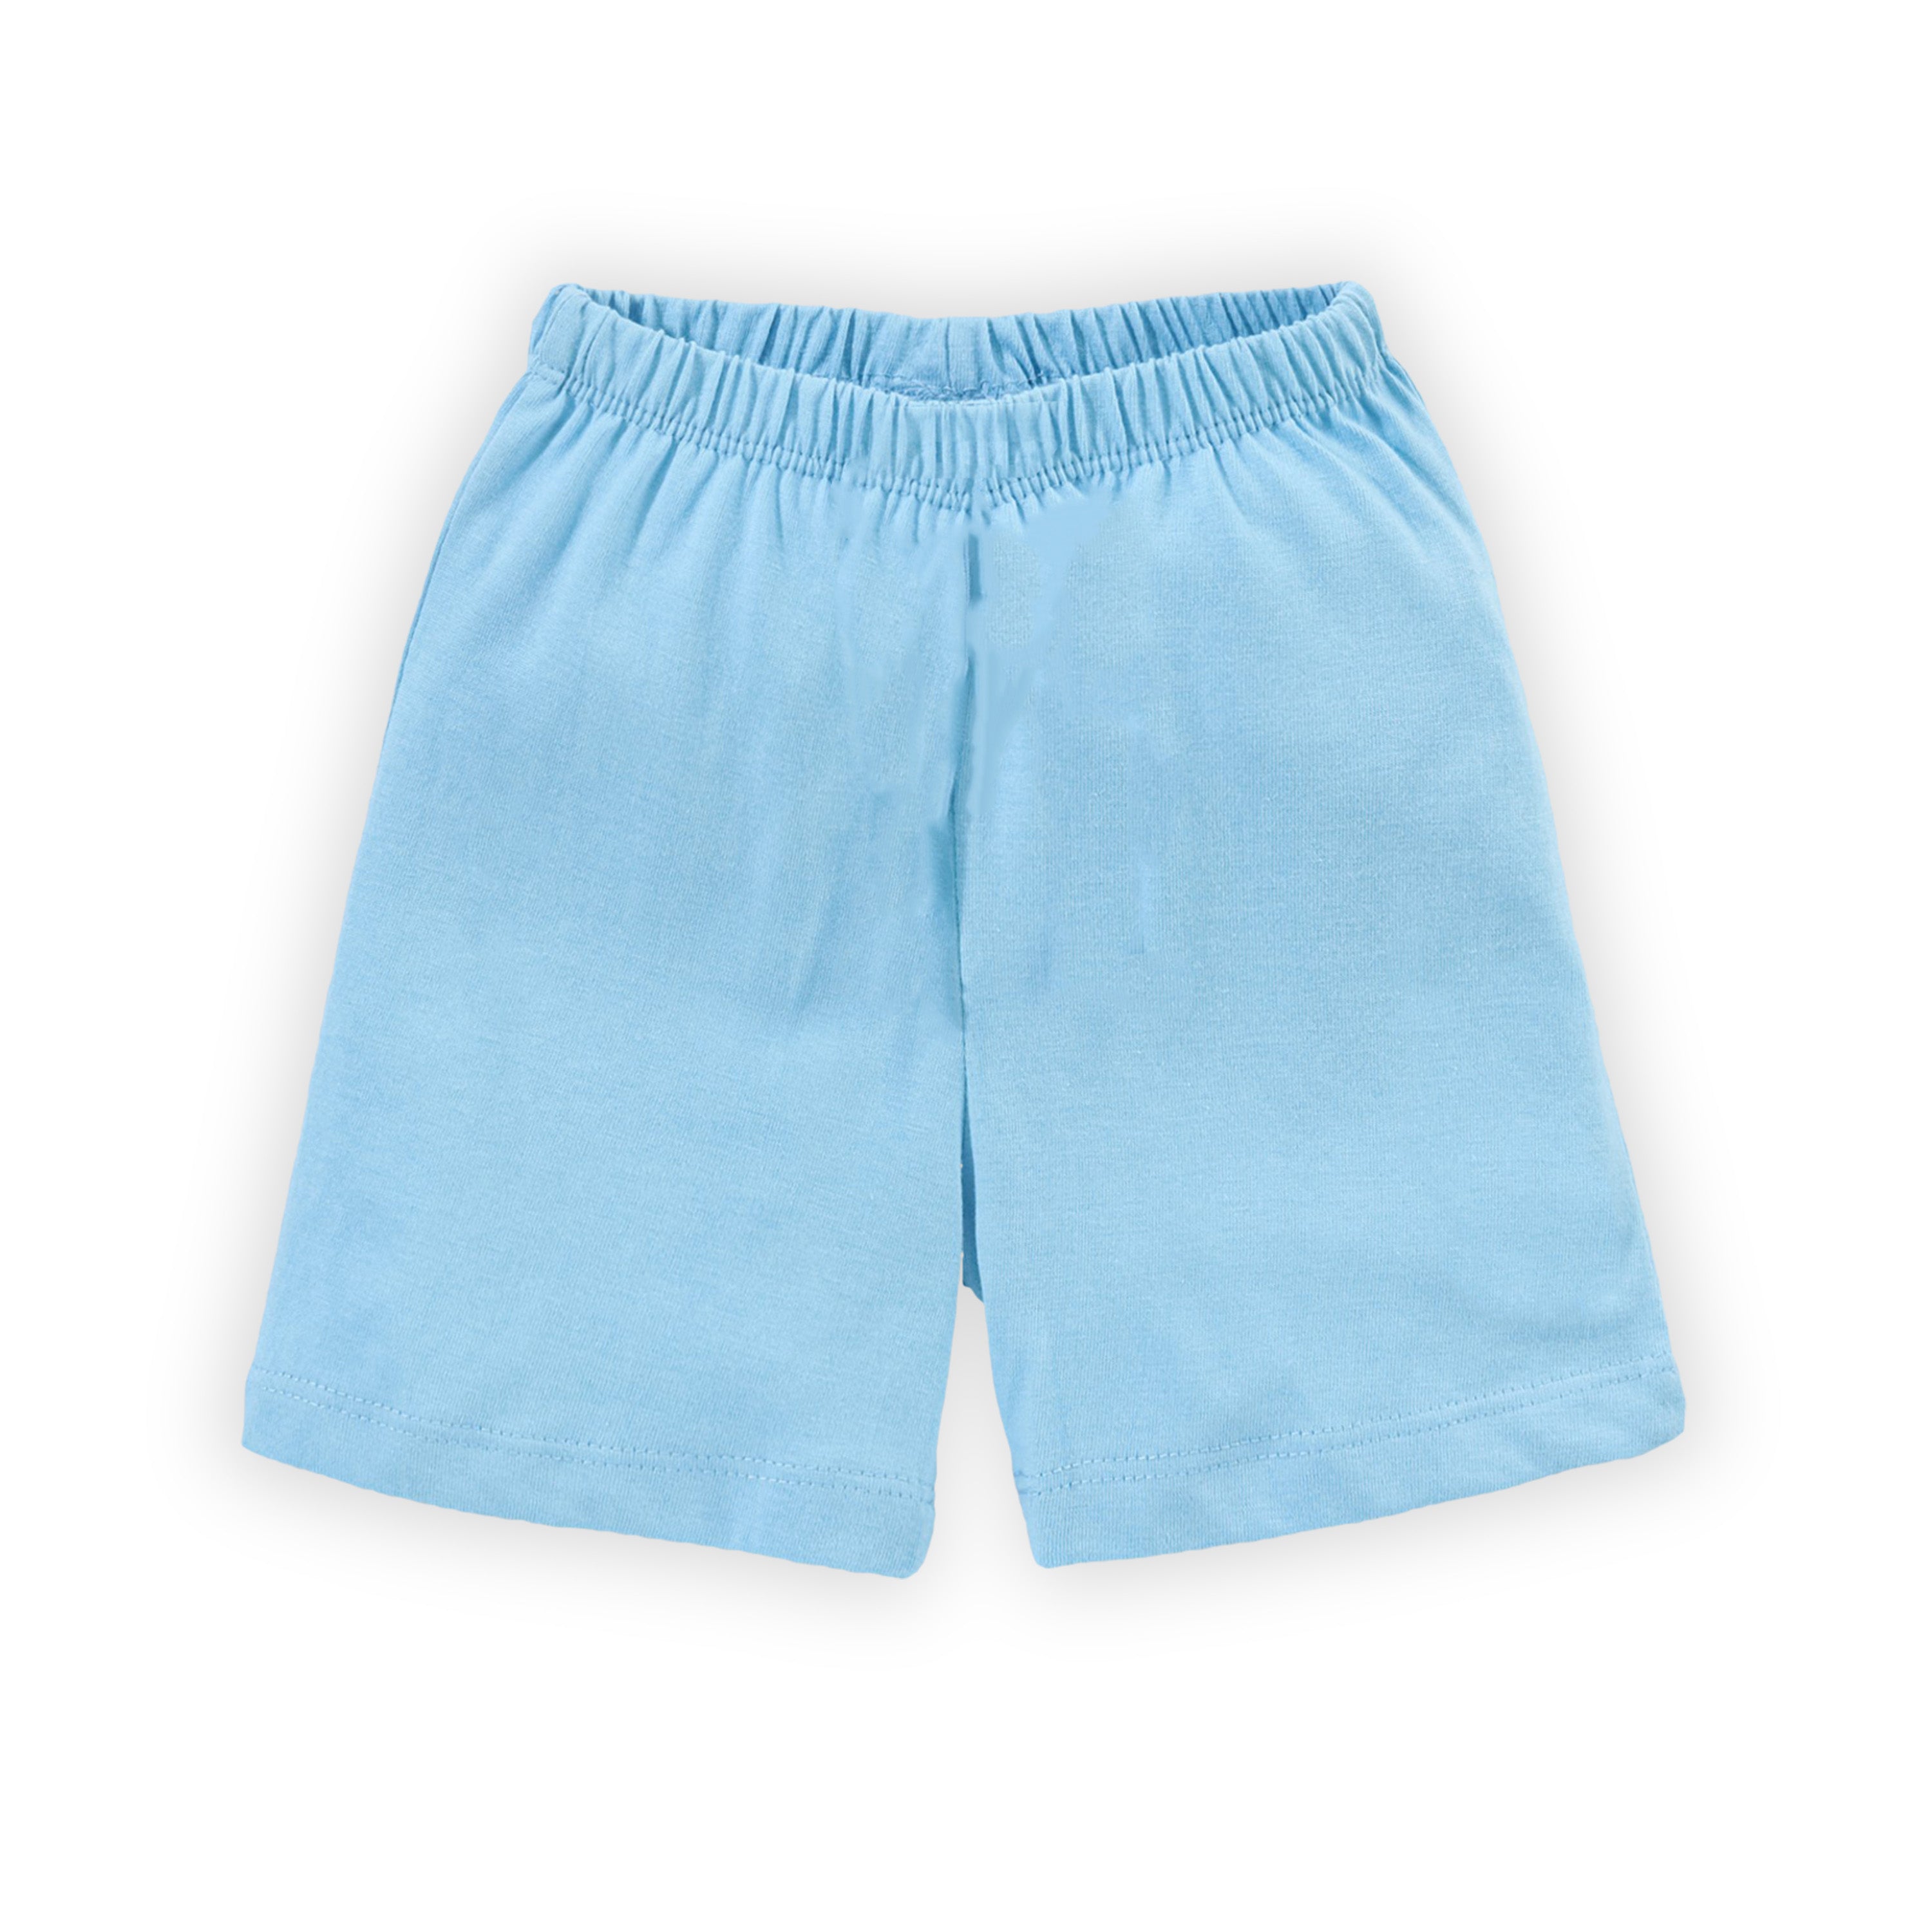 Kids sky blue Solid Cotton Shorts